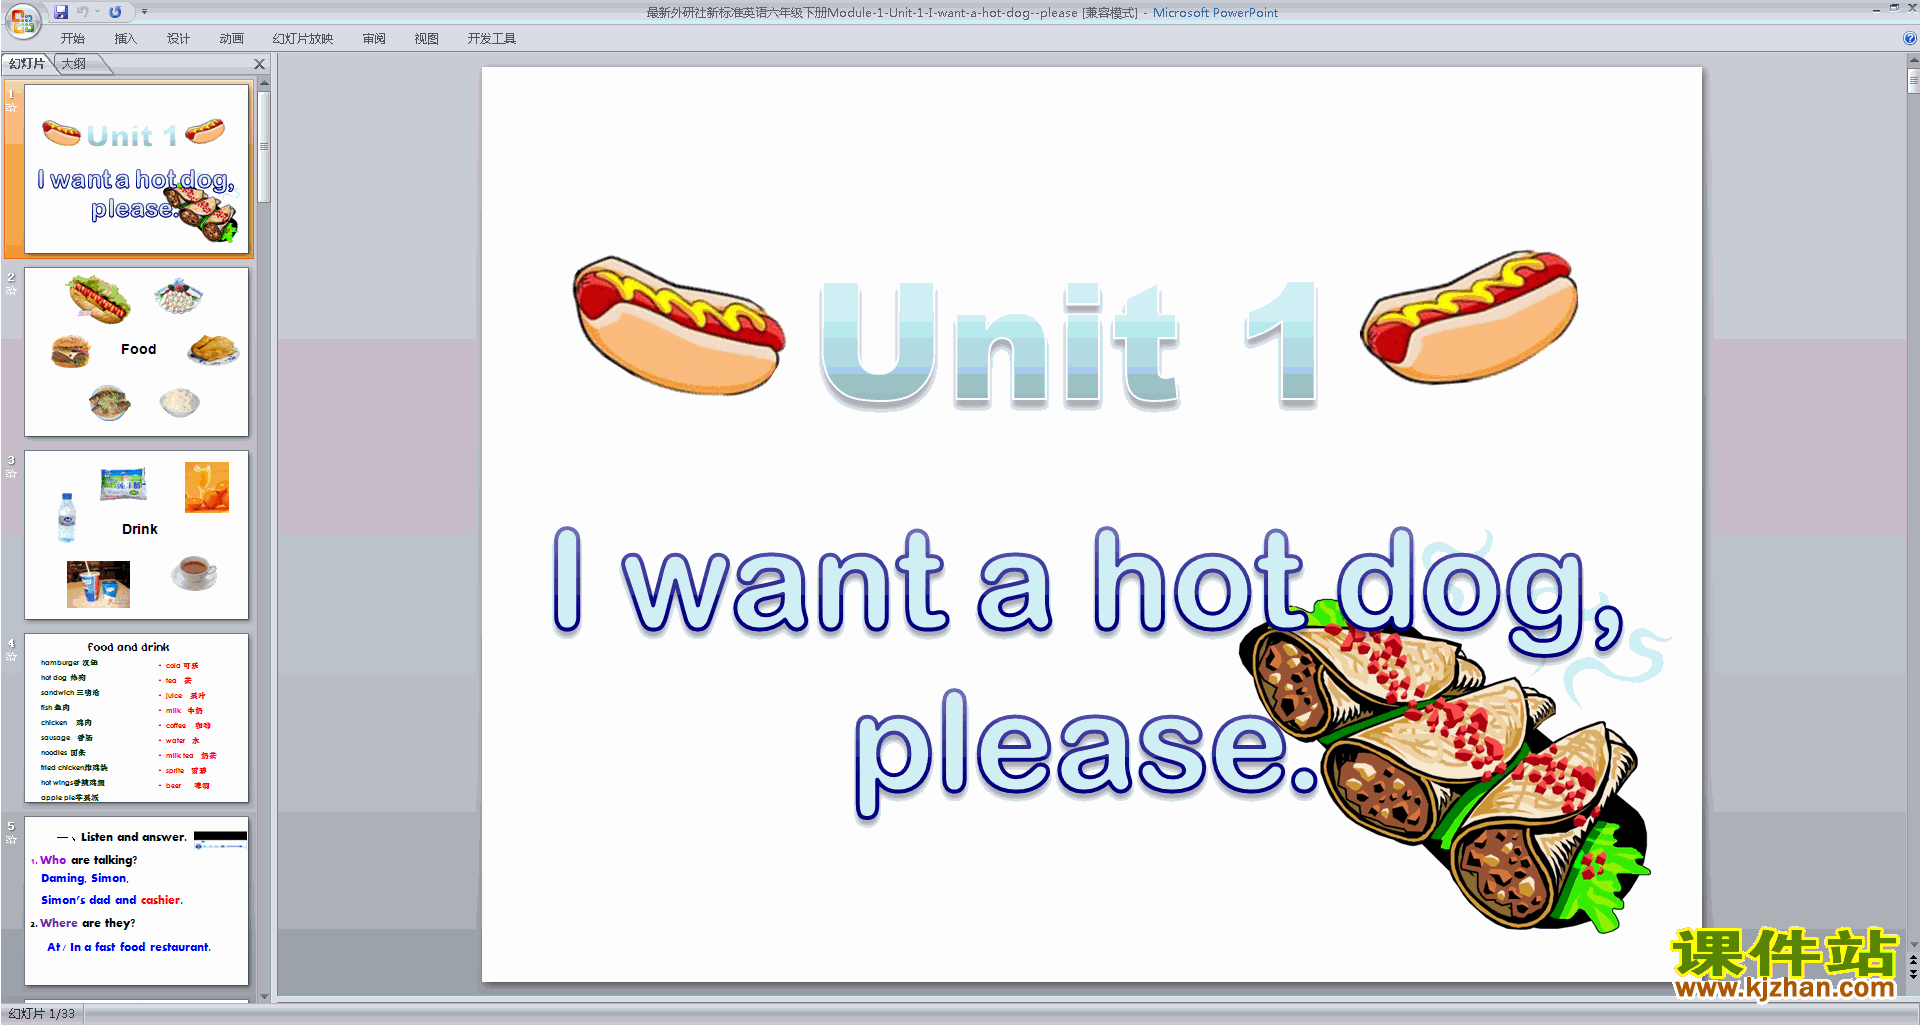 аӢI want a hot dog,pleasepptμ